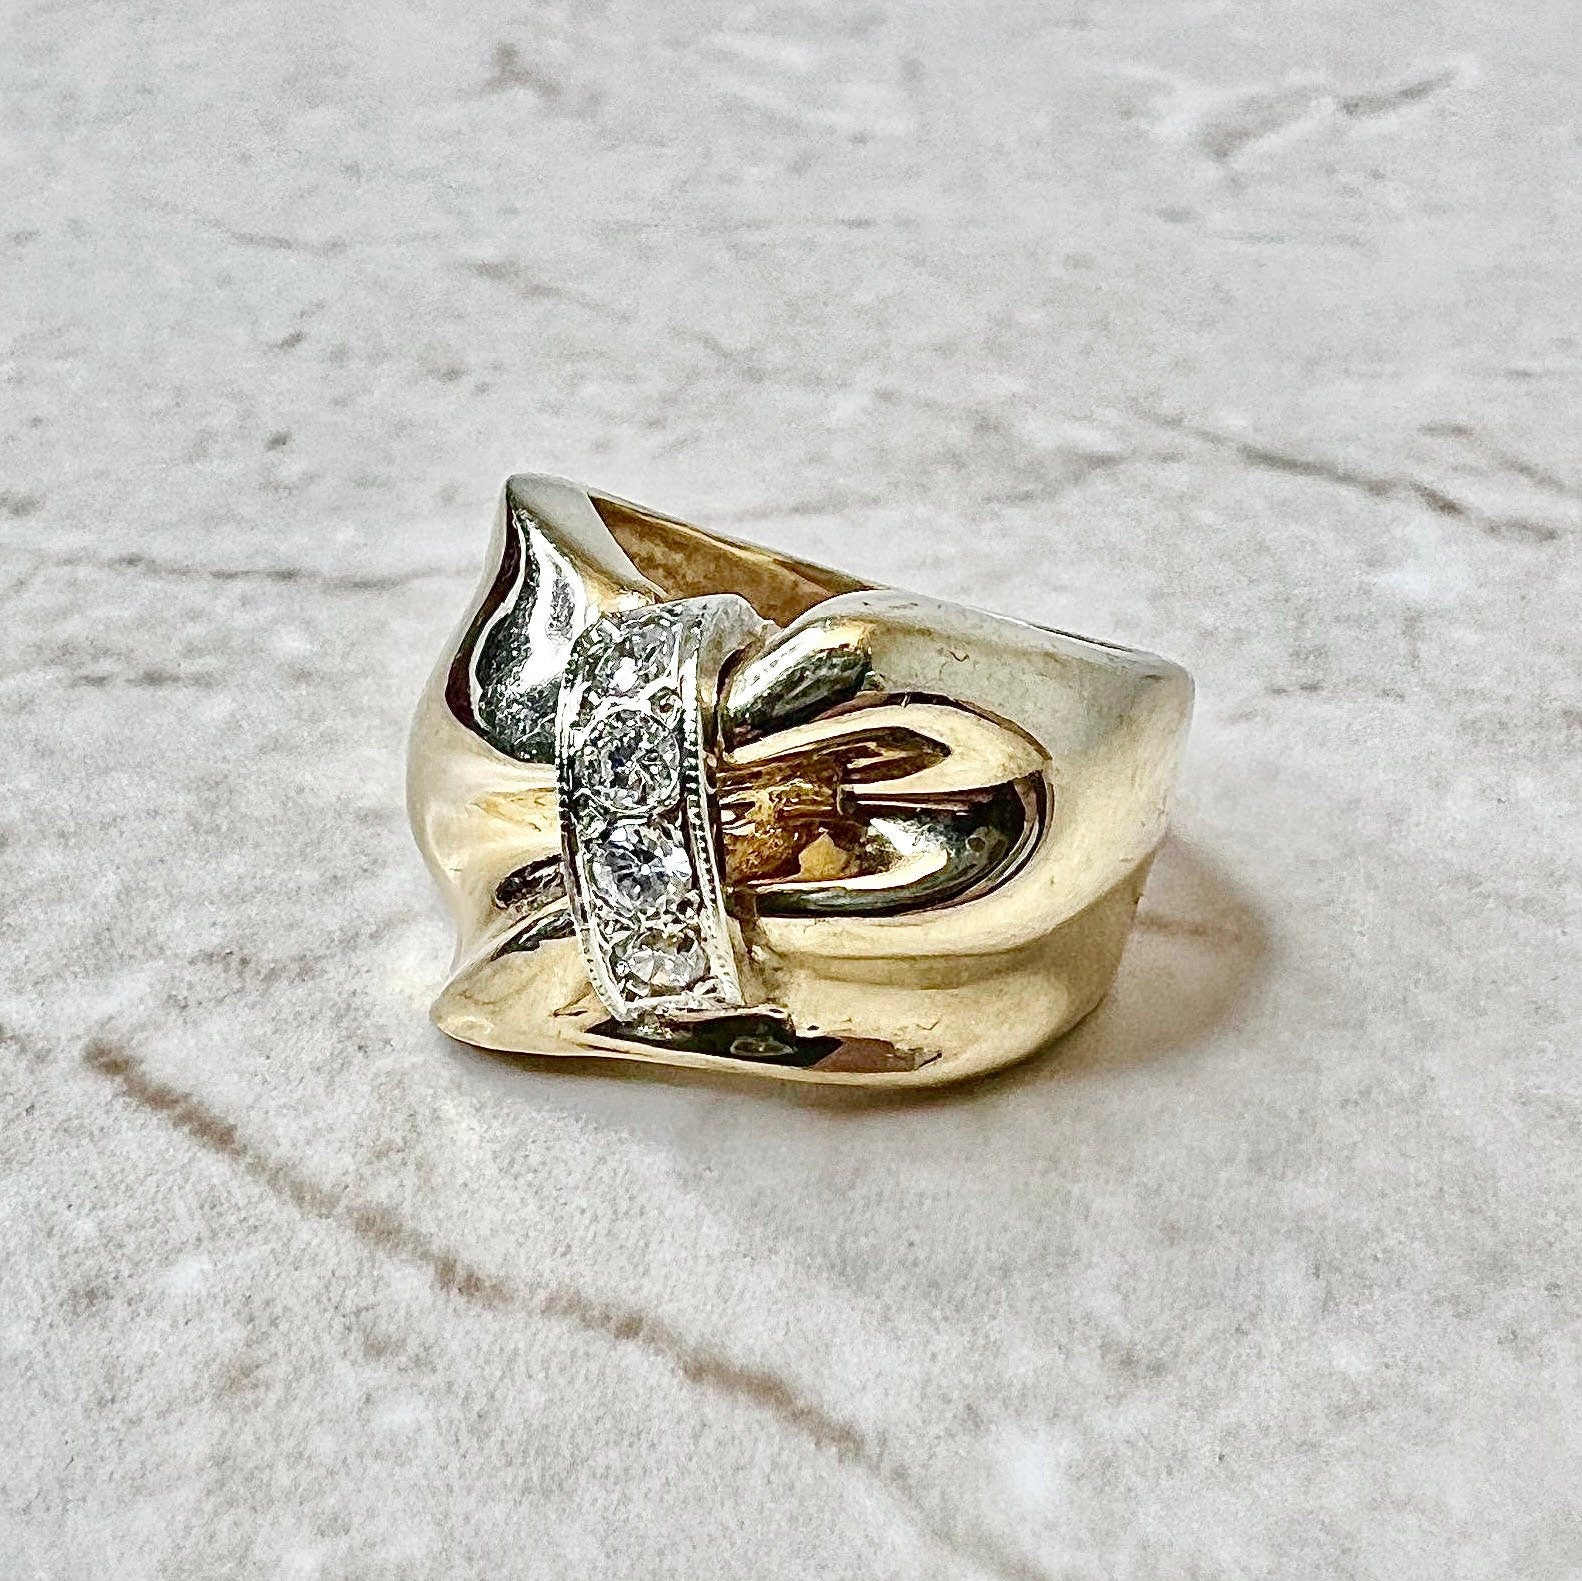 Fine Vintage 14K Retro Diamond Ring - Two Tone Gold - Diamond Cocktail Ring - Birthday Gift - Holiday Gift - Yellow & White Gold - Size 5.5